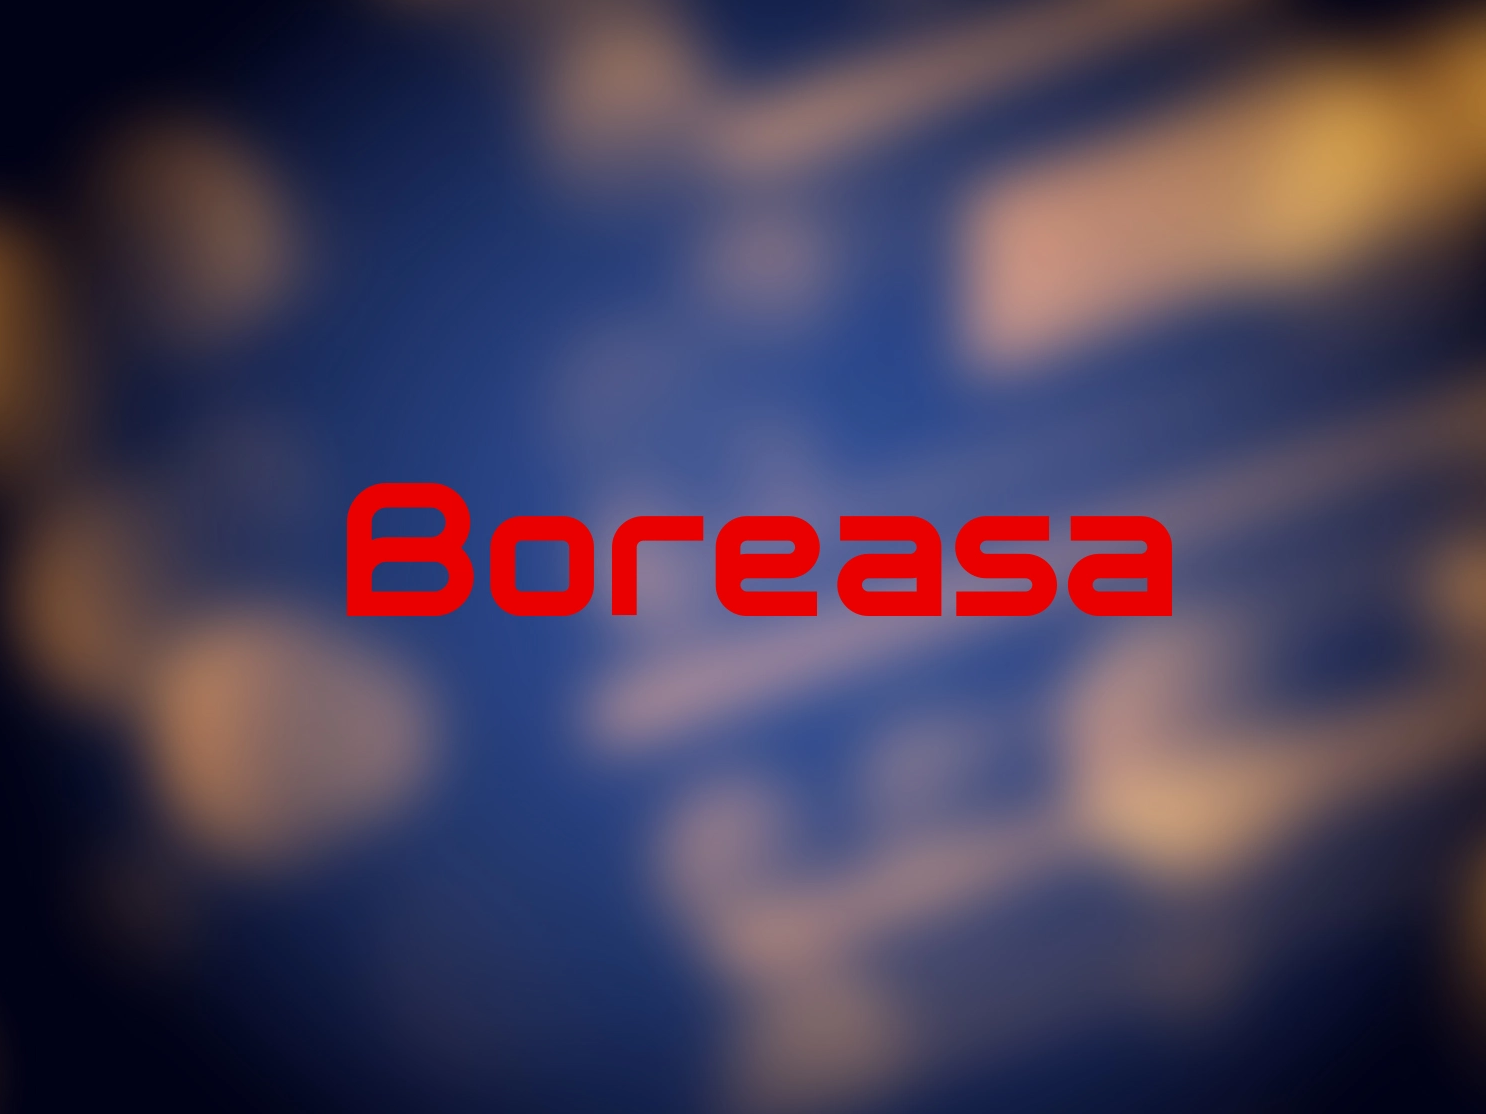 Boreasa 发布 C60S1 系列风机